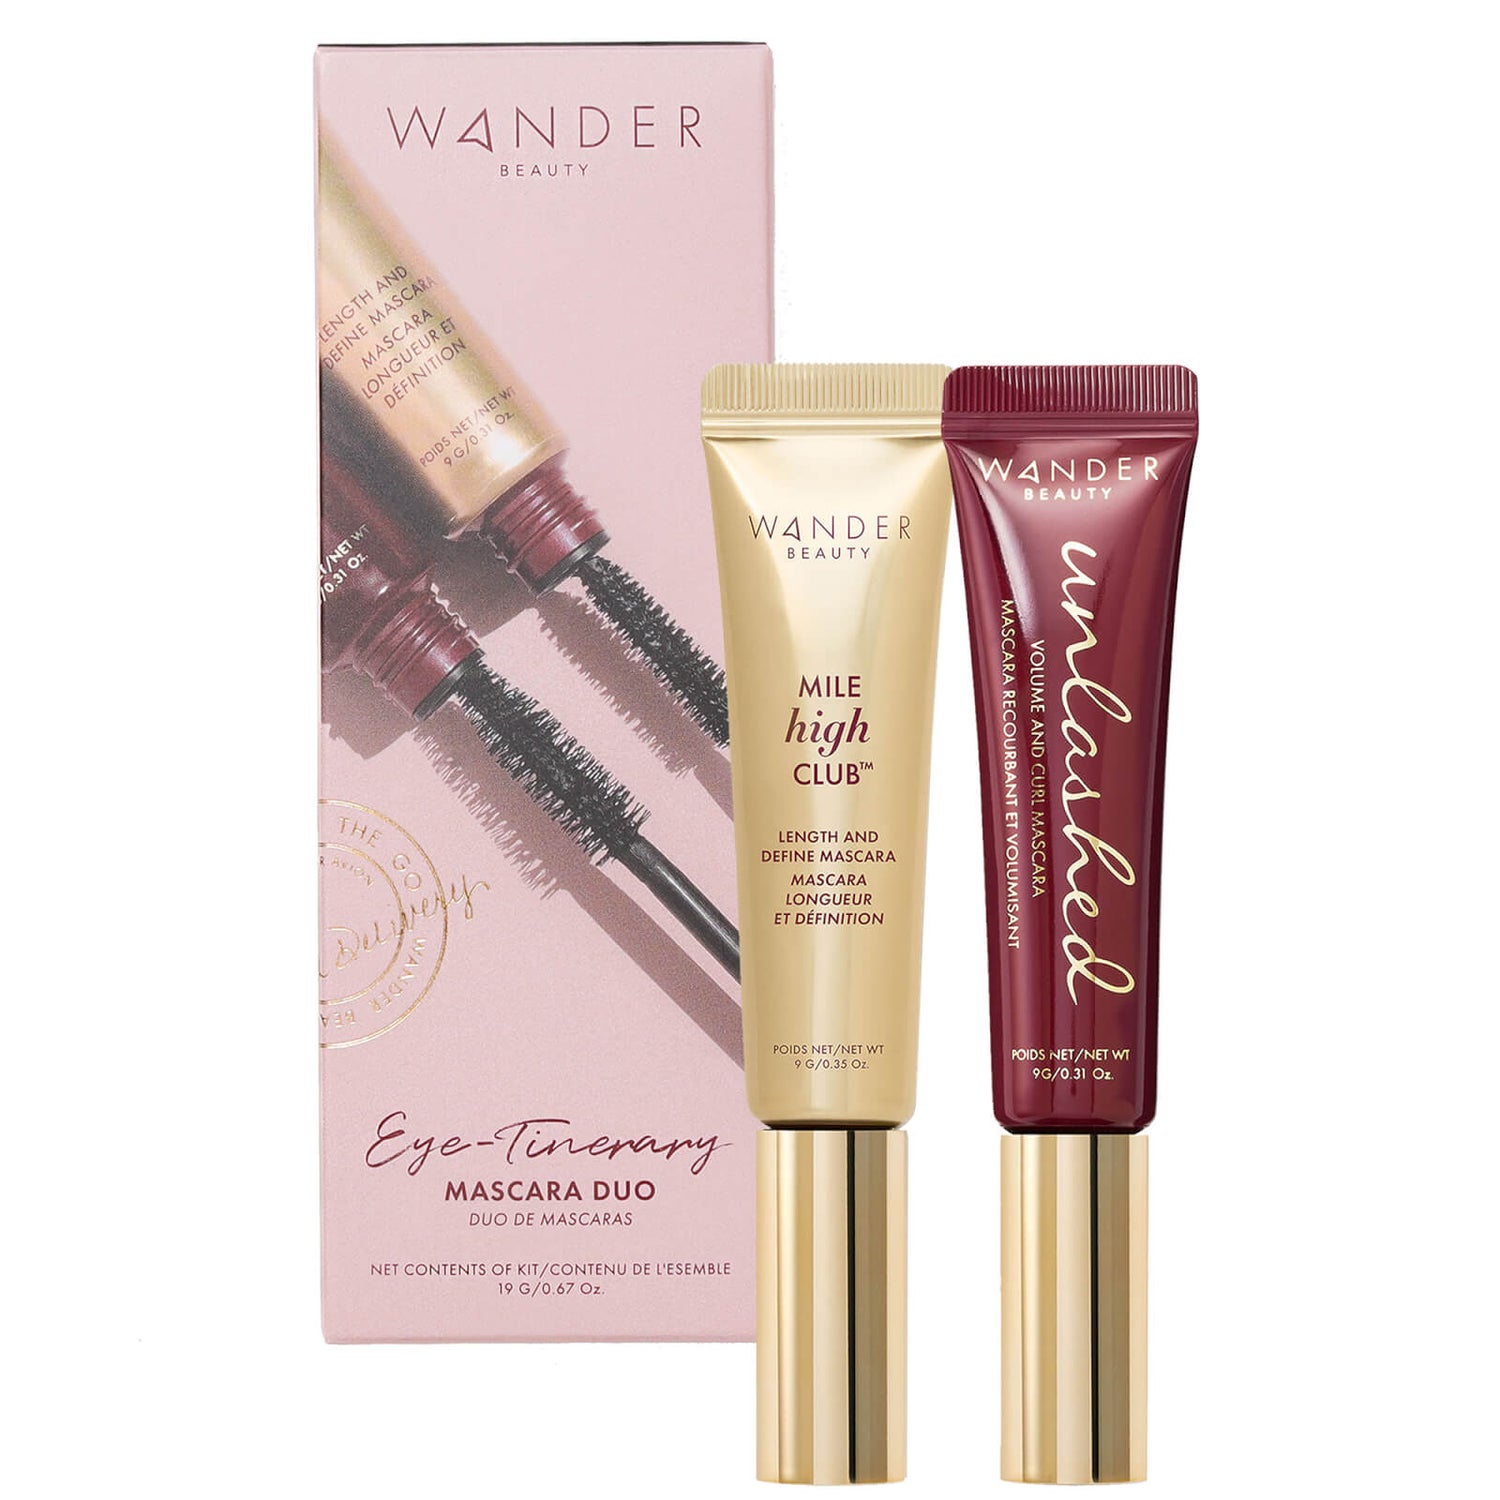 Wander Beauty Eye-tinerary Mascara Duo (Worth $56.00)